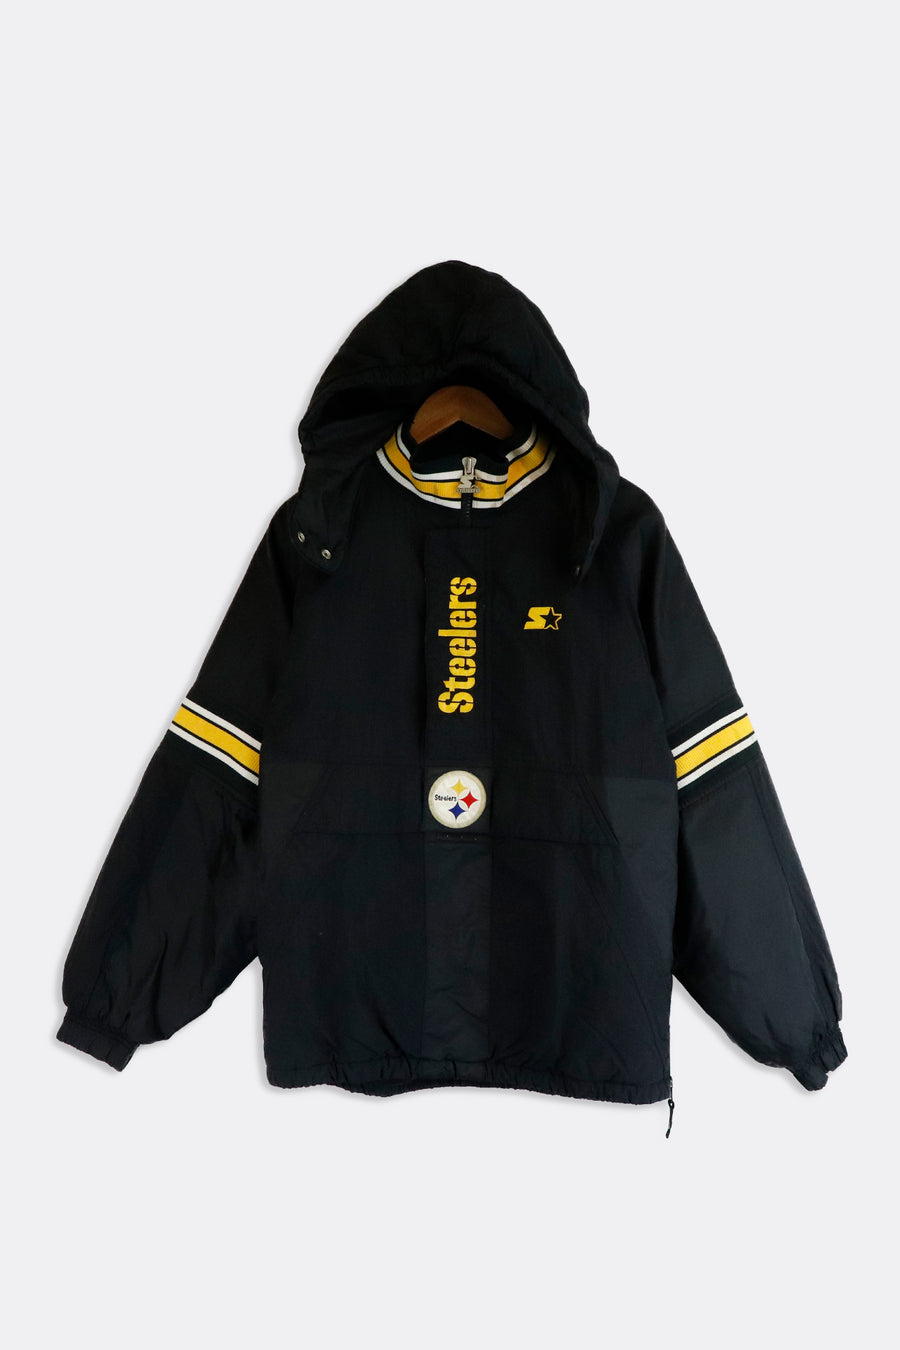 Vintage Starter NFL Pittsburgh Steelers Half Zip Front Pocket Jacket Sz XL